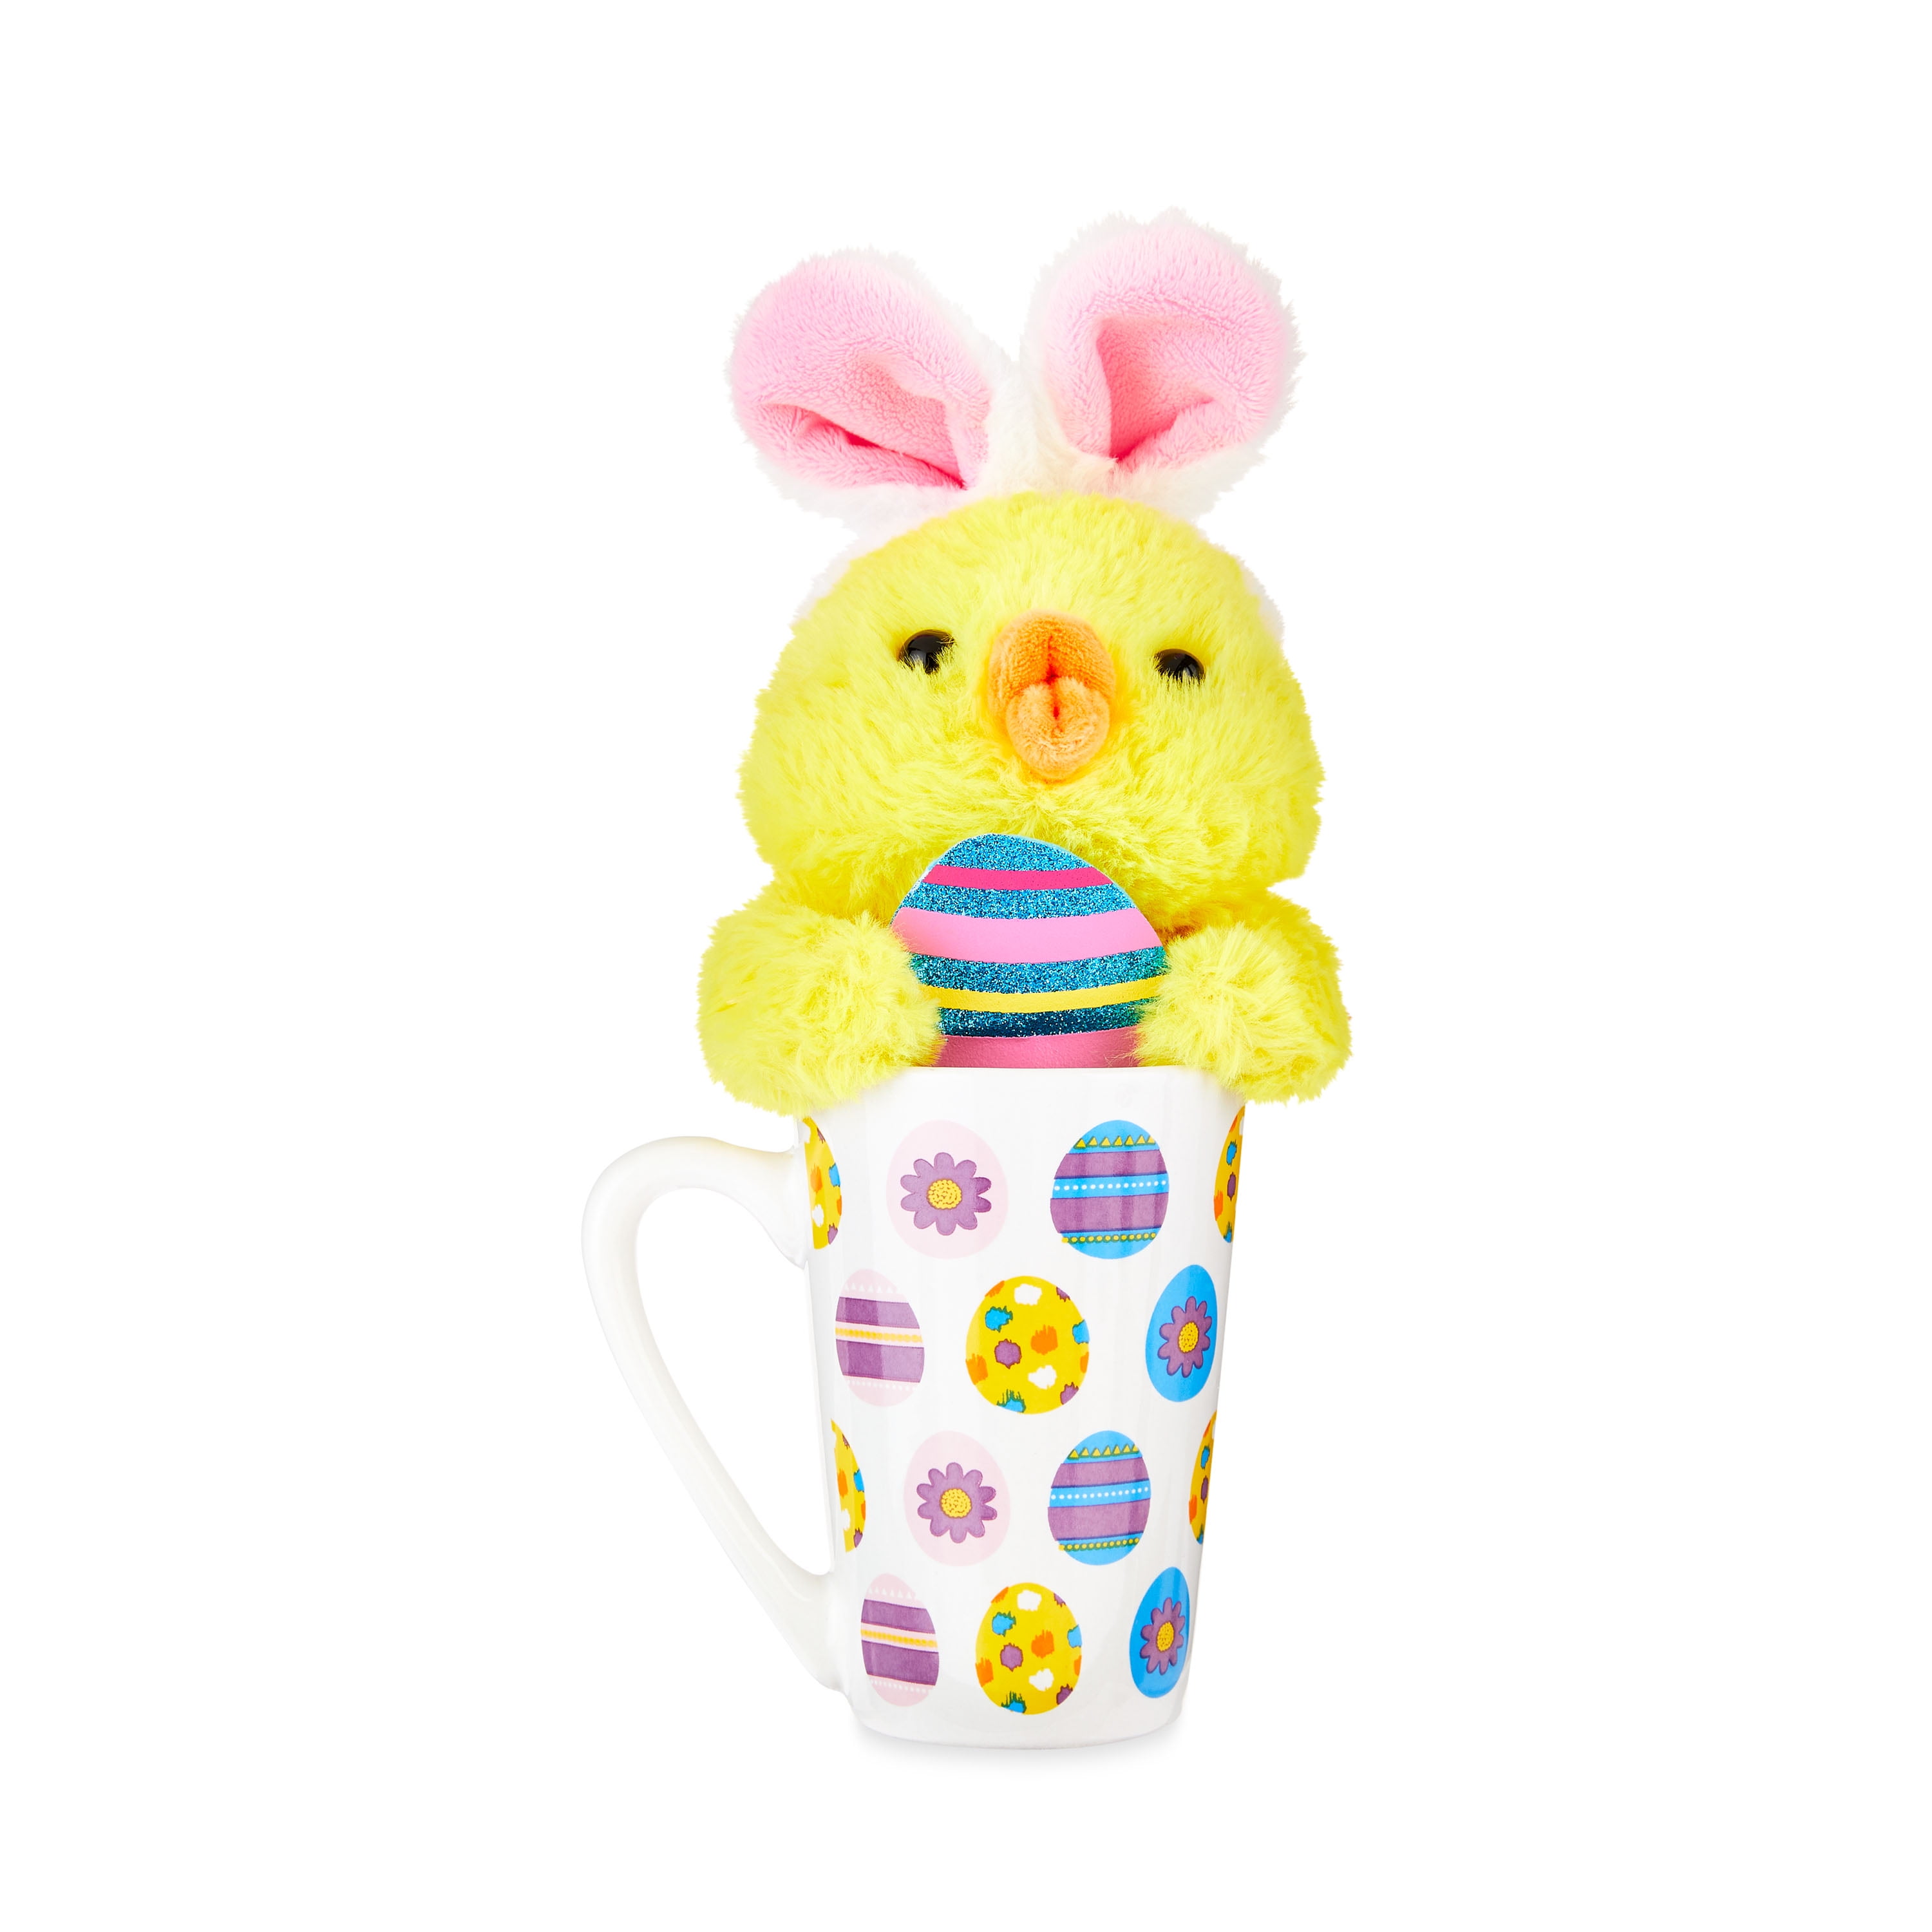 "Way to Celebrate! Easter Plush in Latte Mug, Chick"